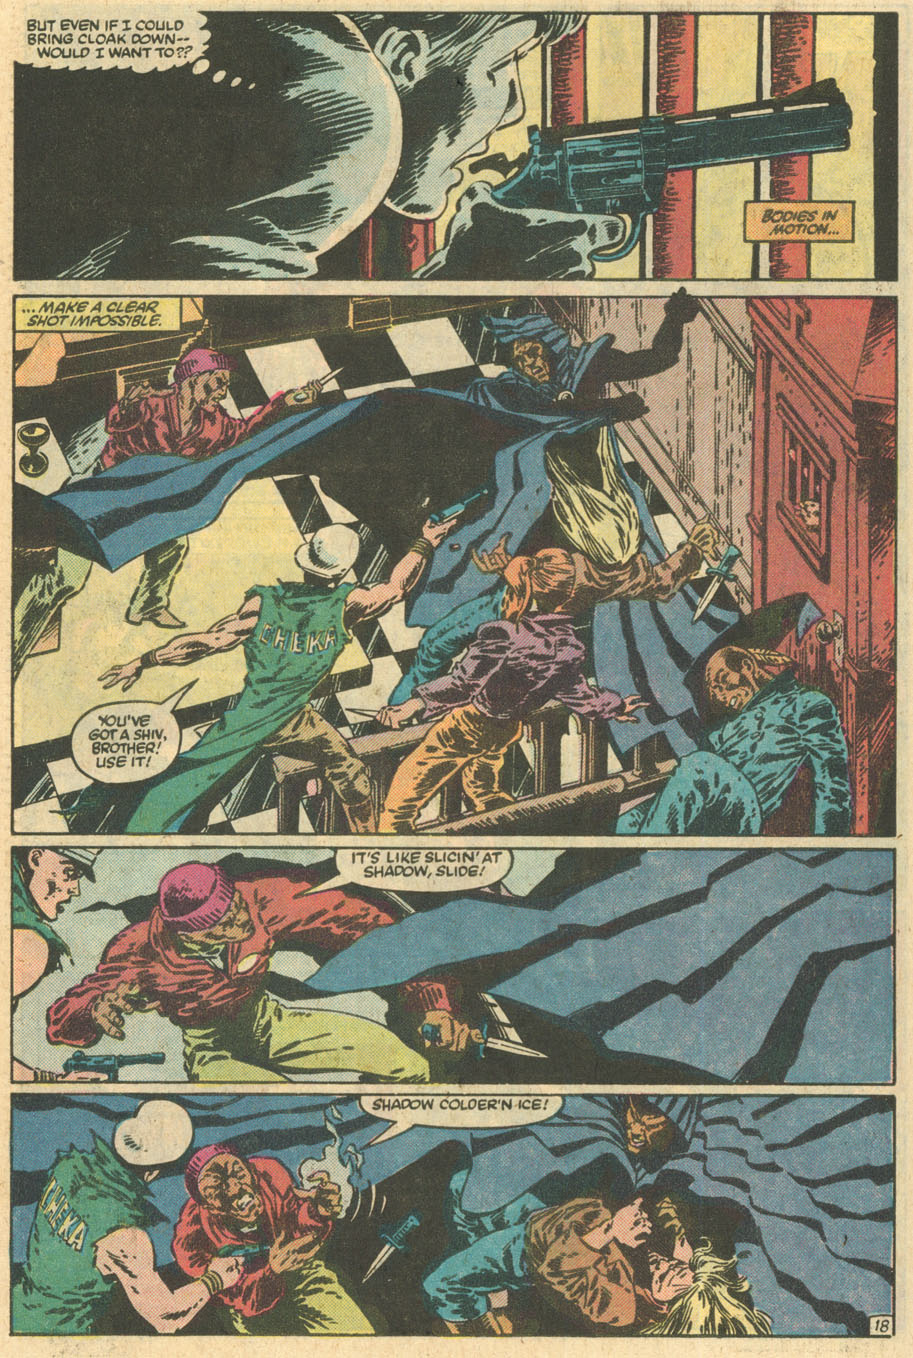 Cloak And Dagger 1983 Issue 3 Viewcomic Reading Comics